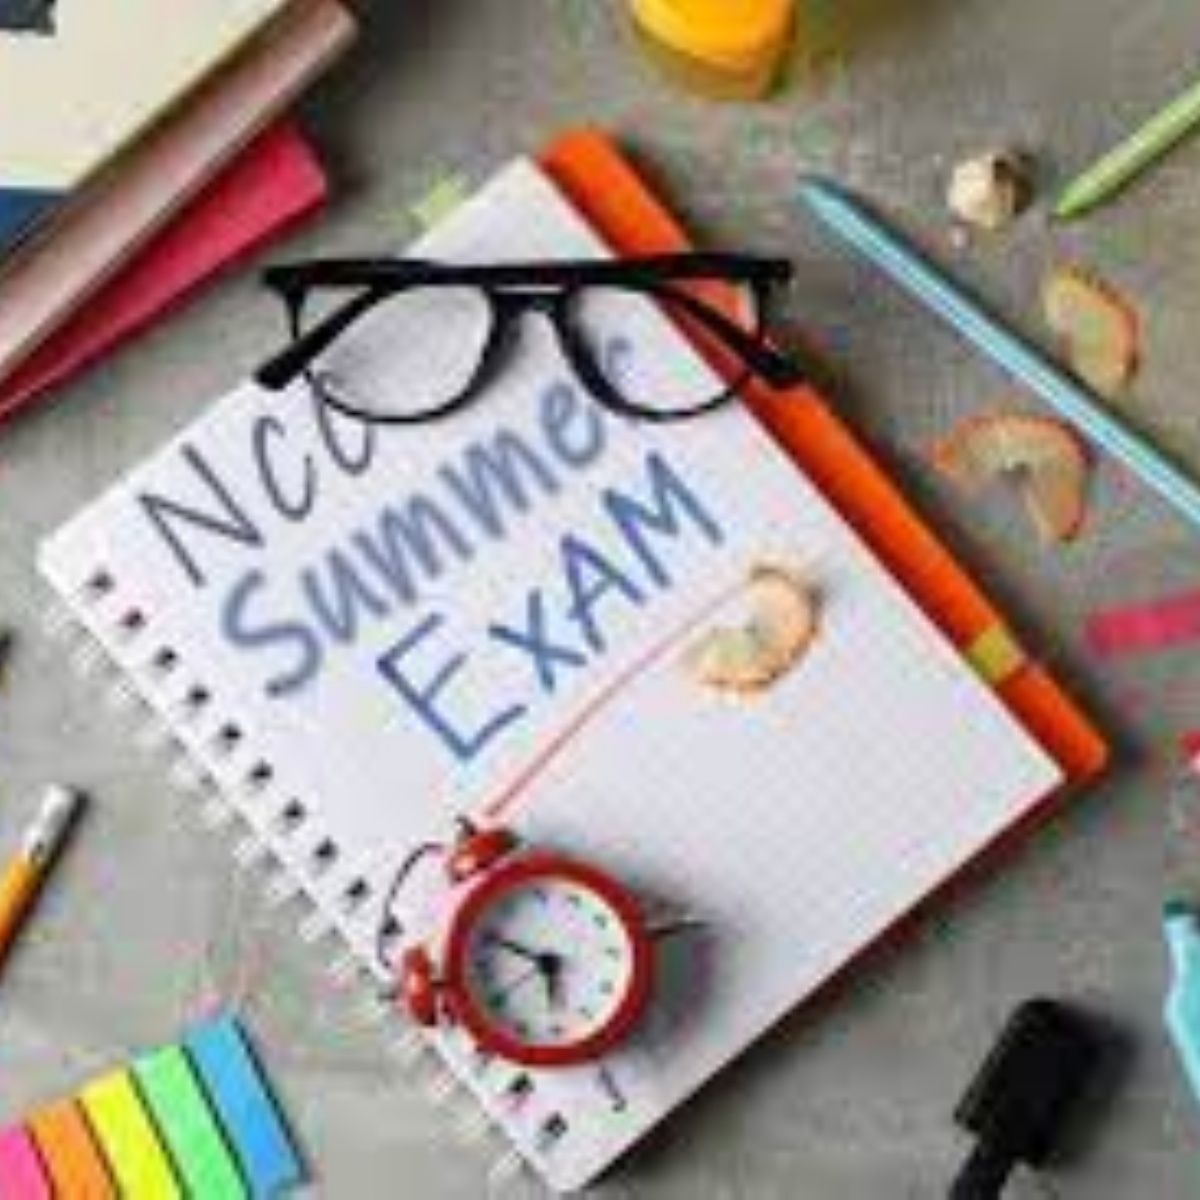 Newman Catholic College Summer 2022 Exam Timetable